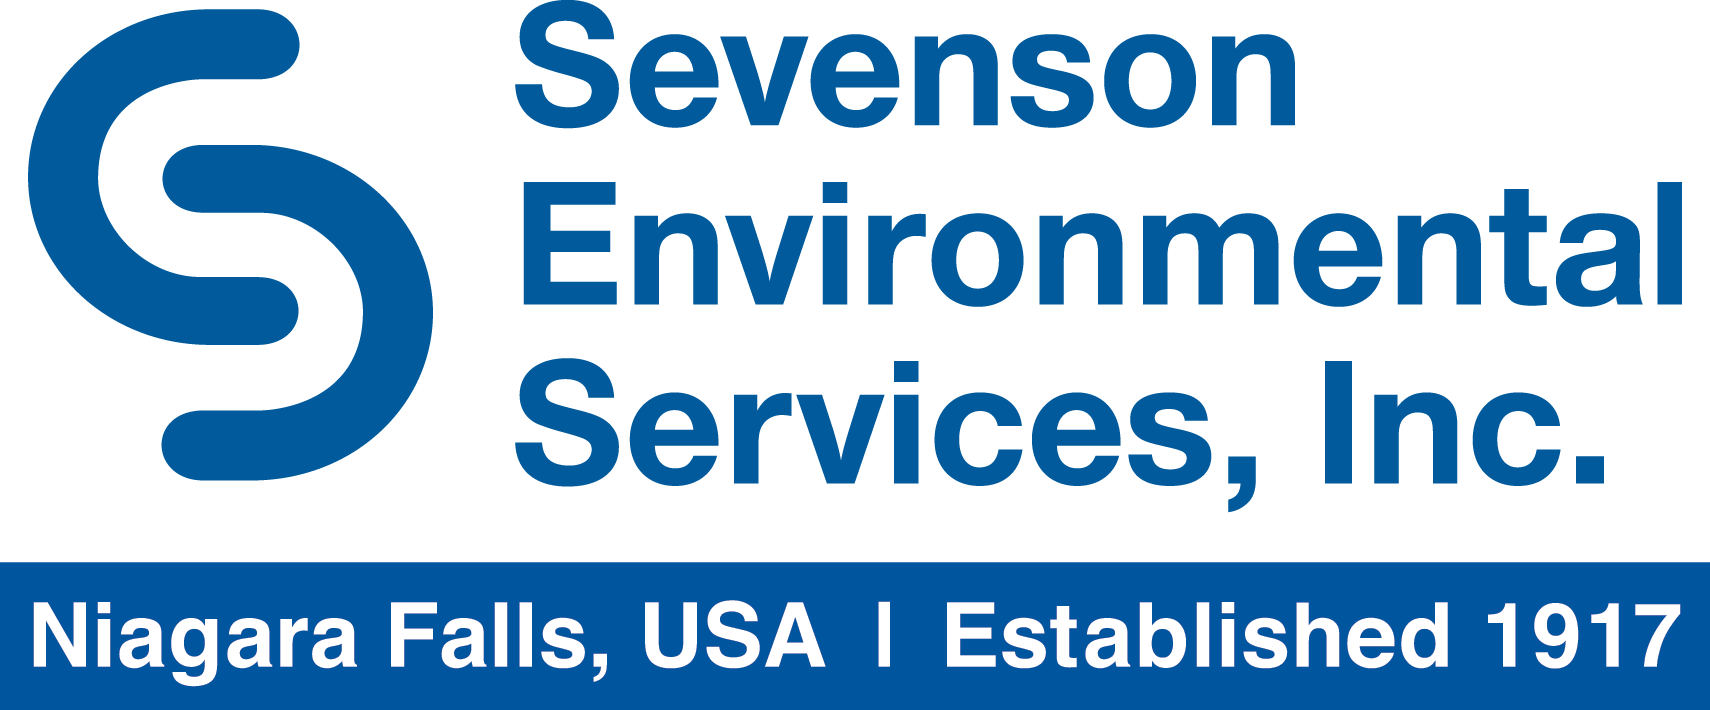 Sevenson Environmental Services Company Logo